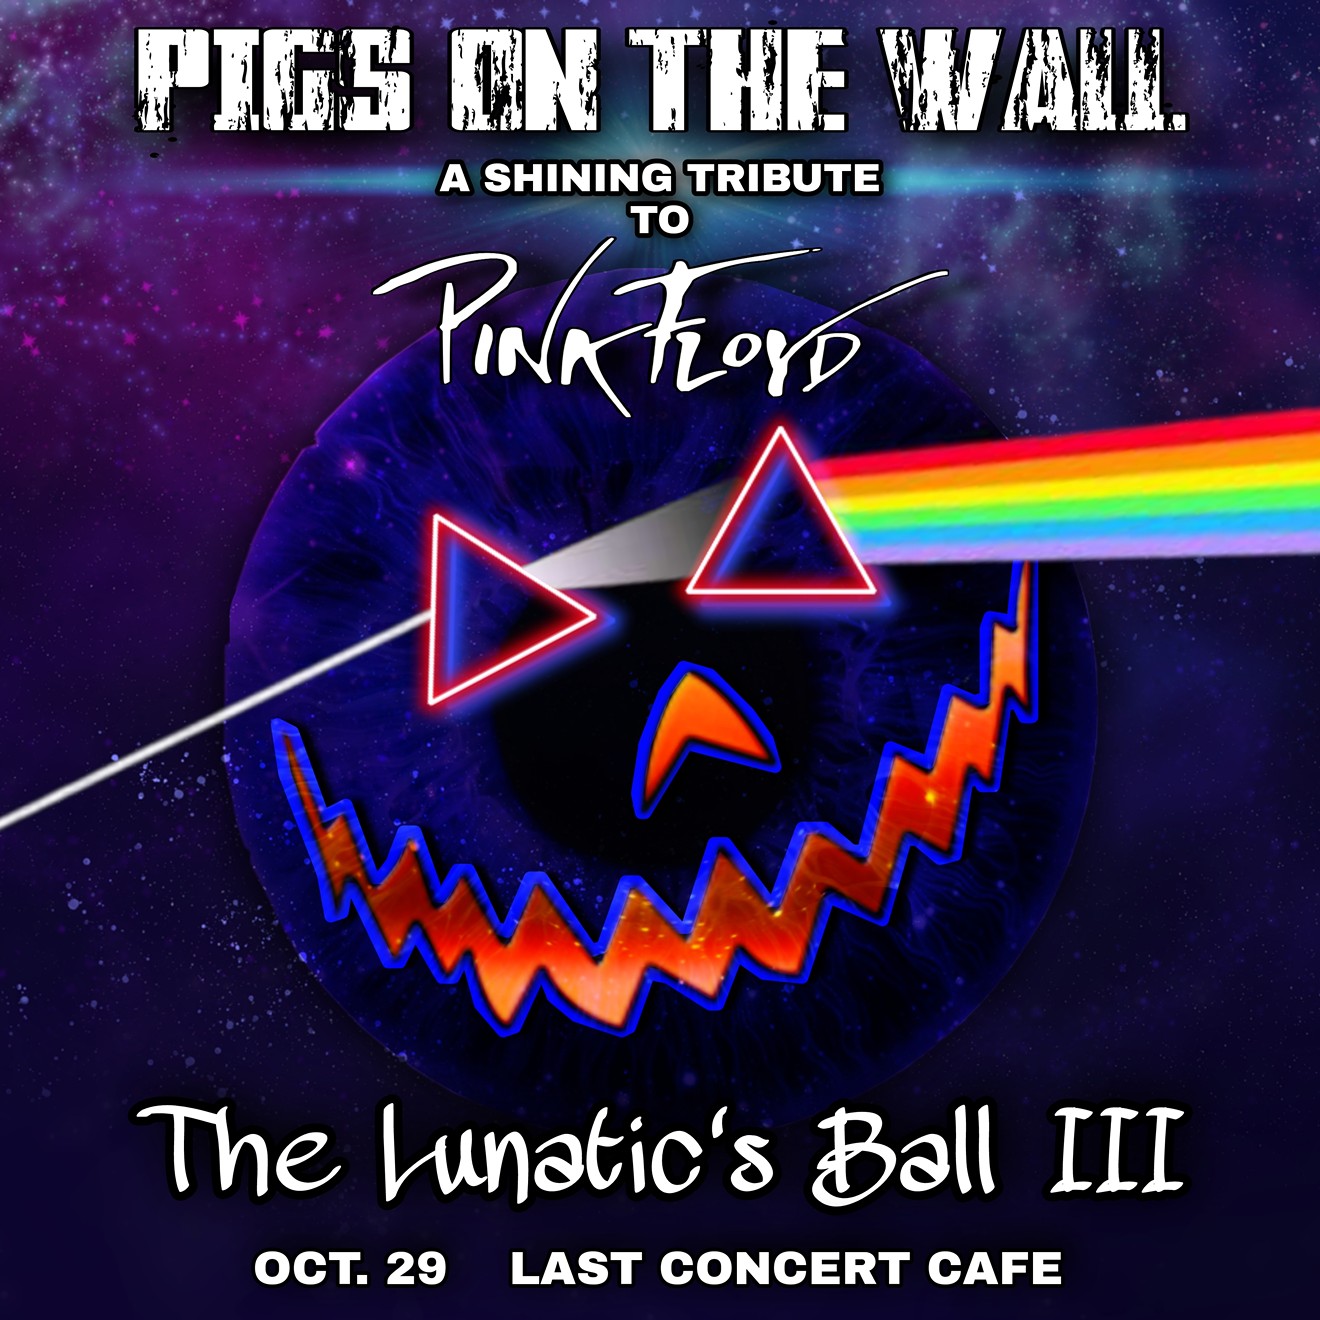 The Lunatic's Ball